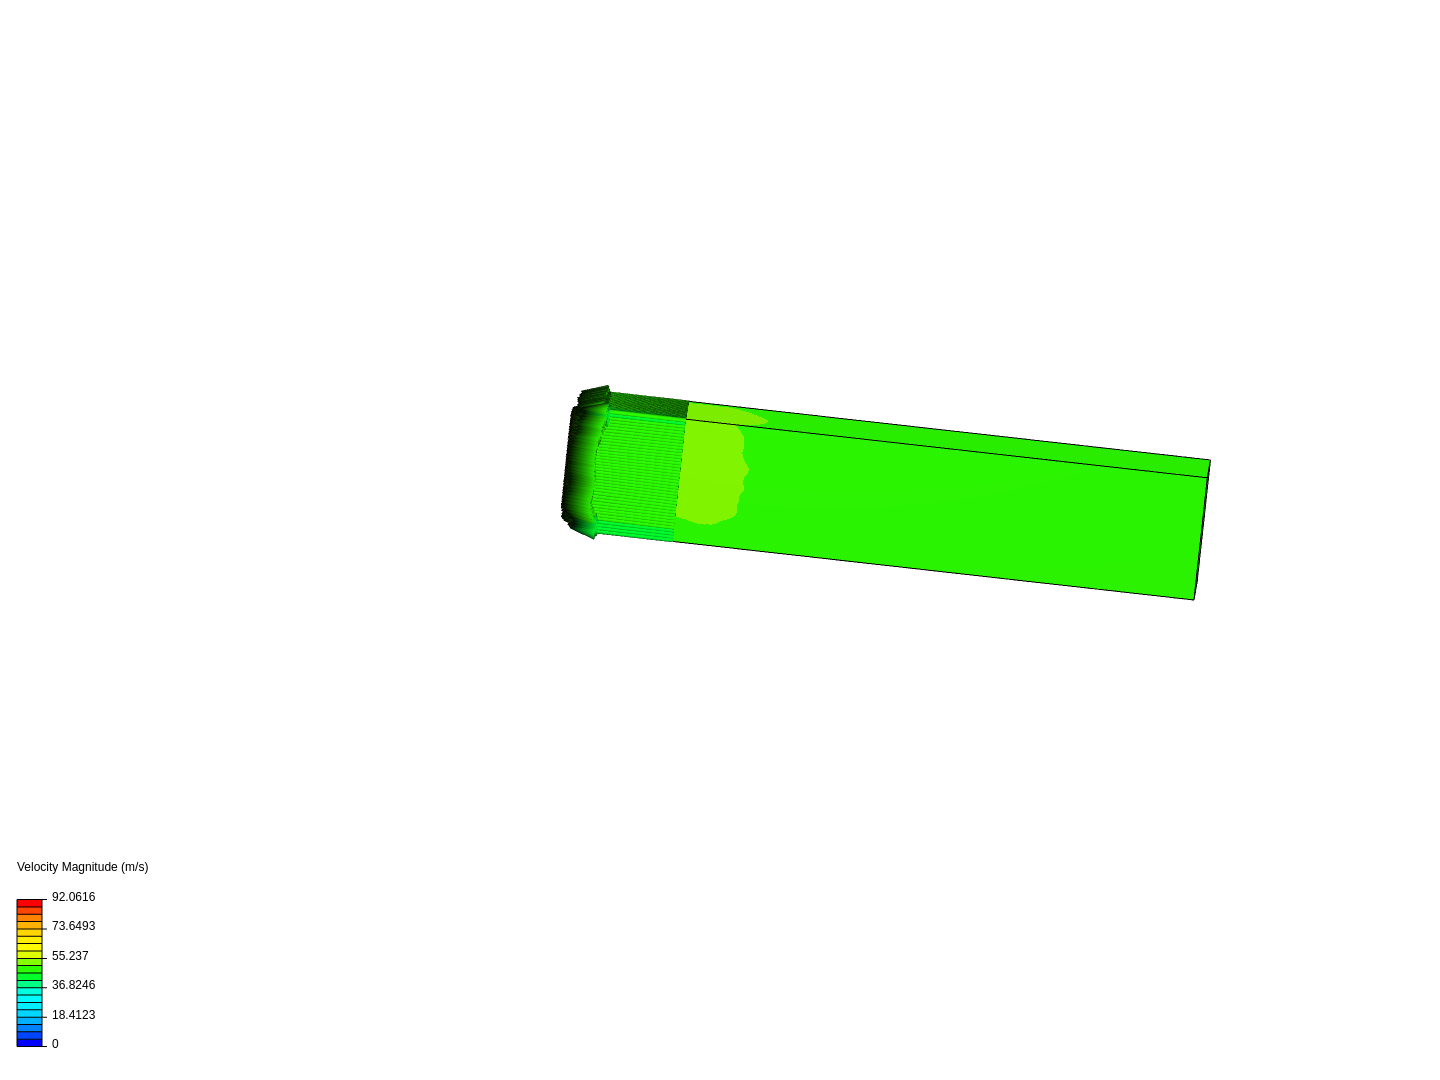 Pitot Tube Simulation image